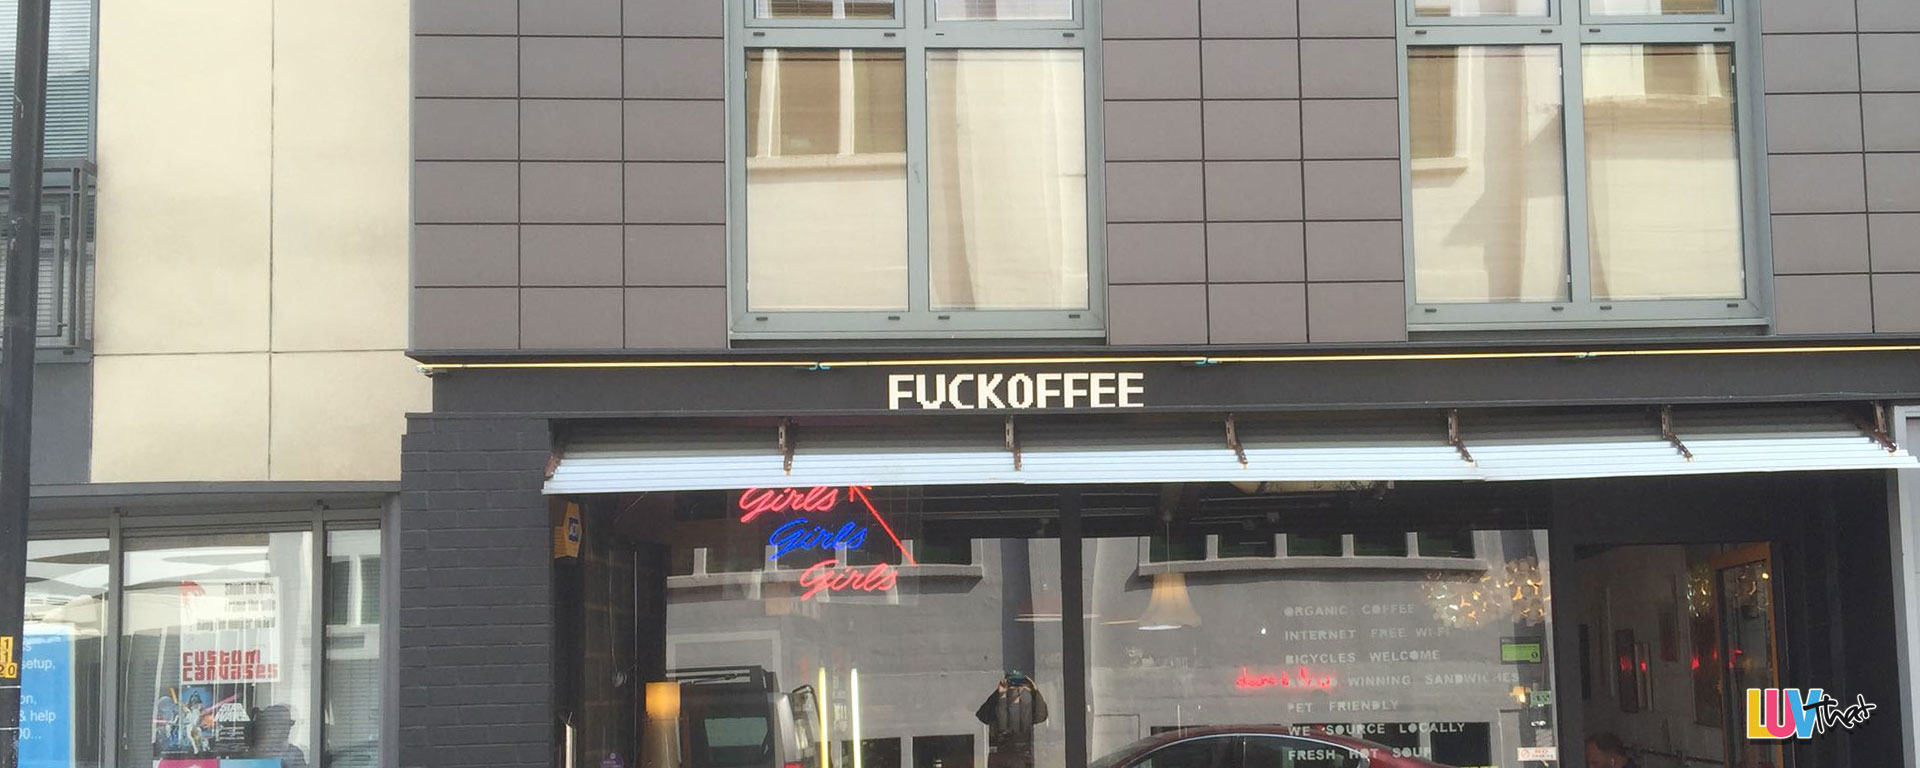 fuckoffee